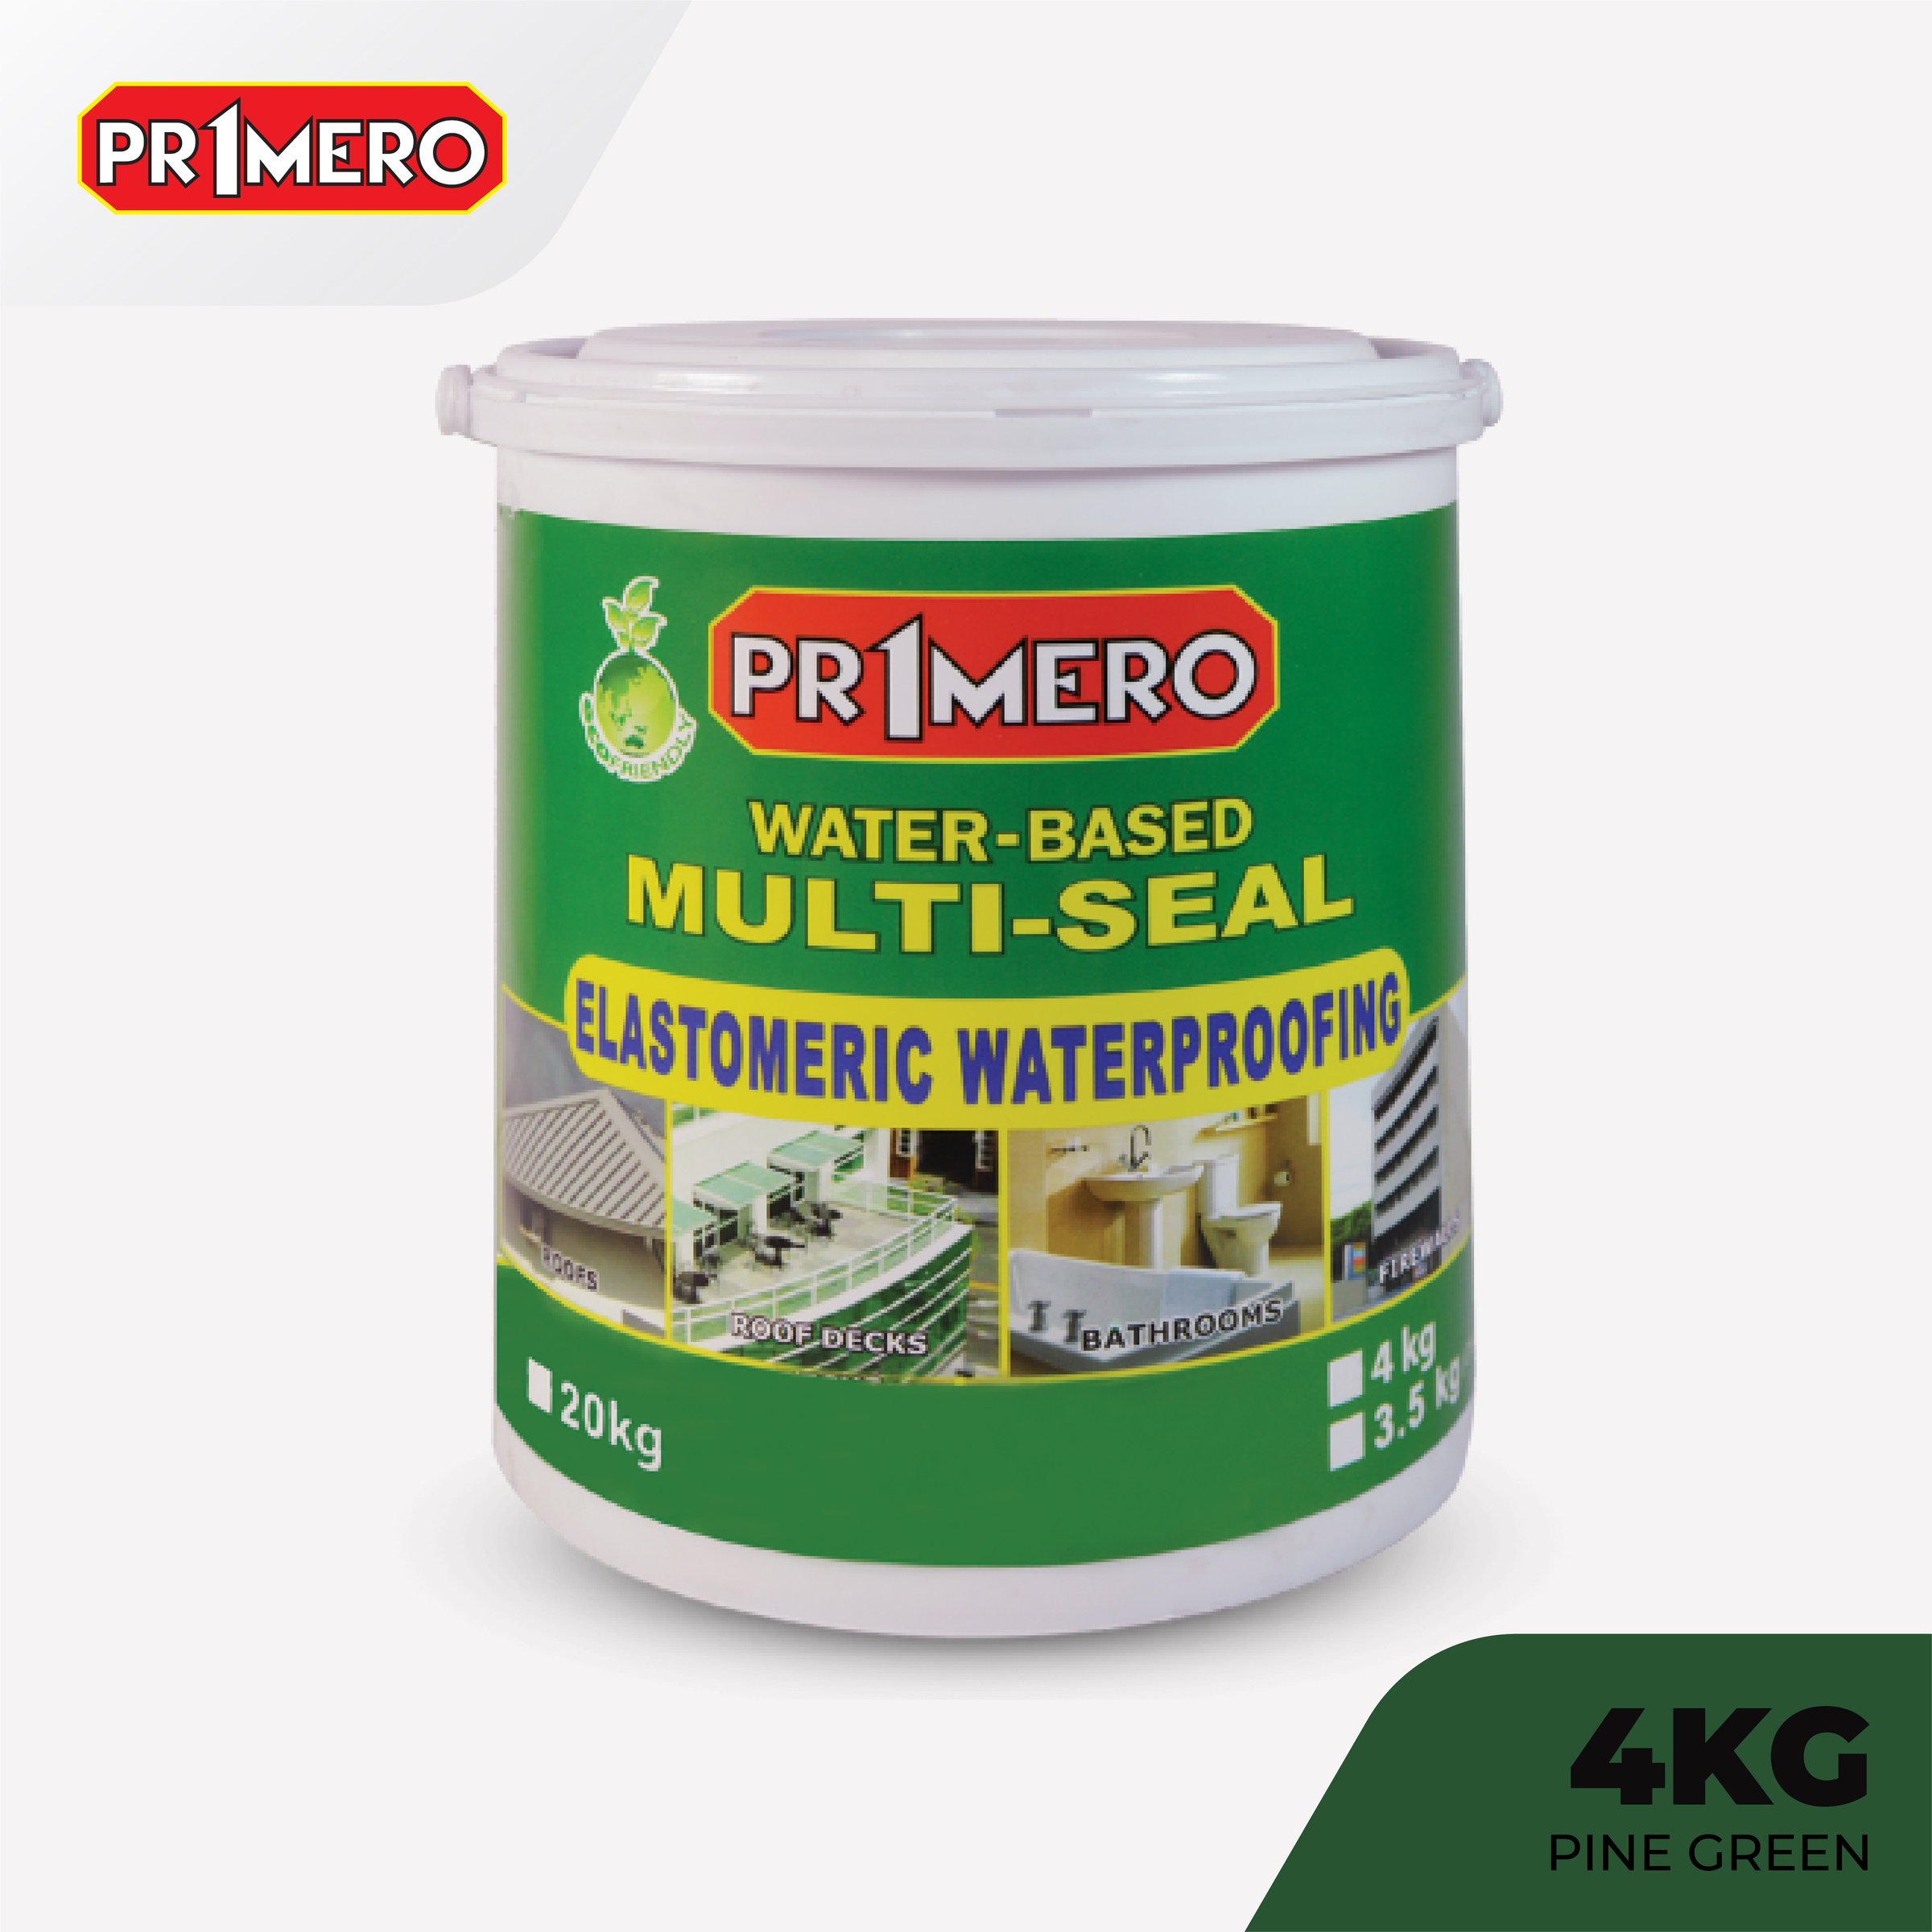 Primero Multi-Seal Elastomeric Waterproofing Sealant Pine Green - 4Kg